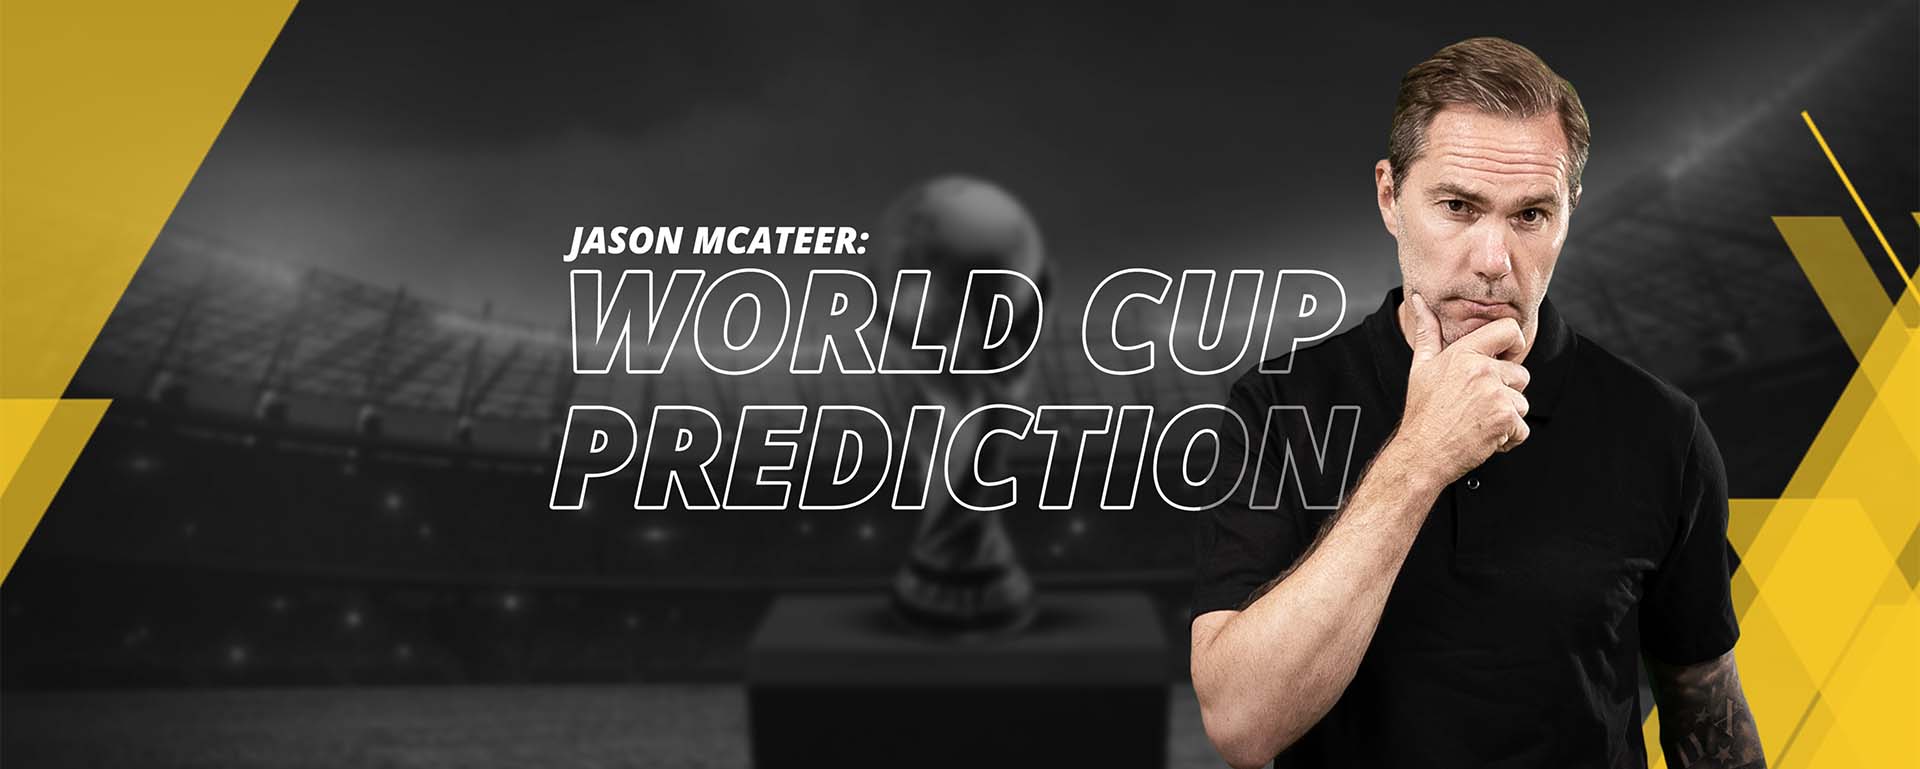 FANTASY MUNDIAL 2022: JASON MCATEER WORLD CUP PREDICTION